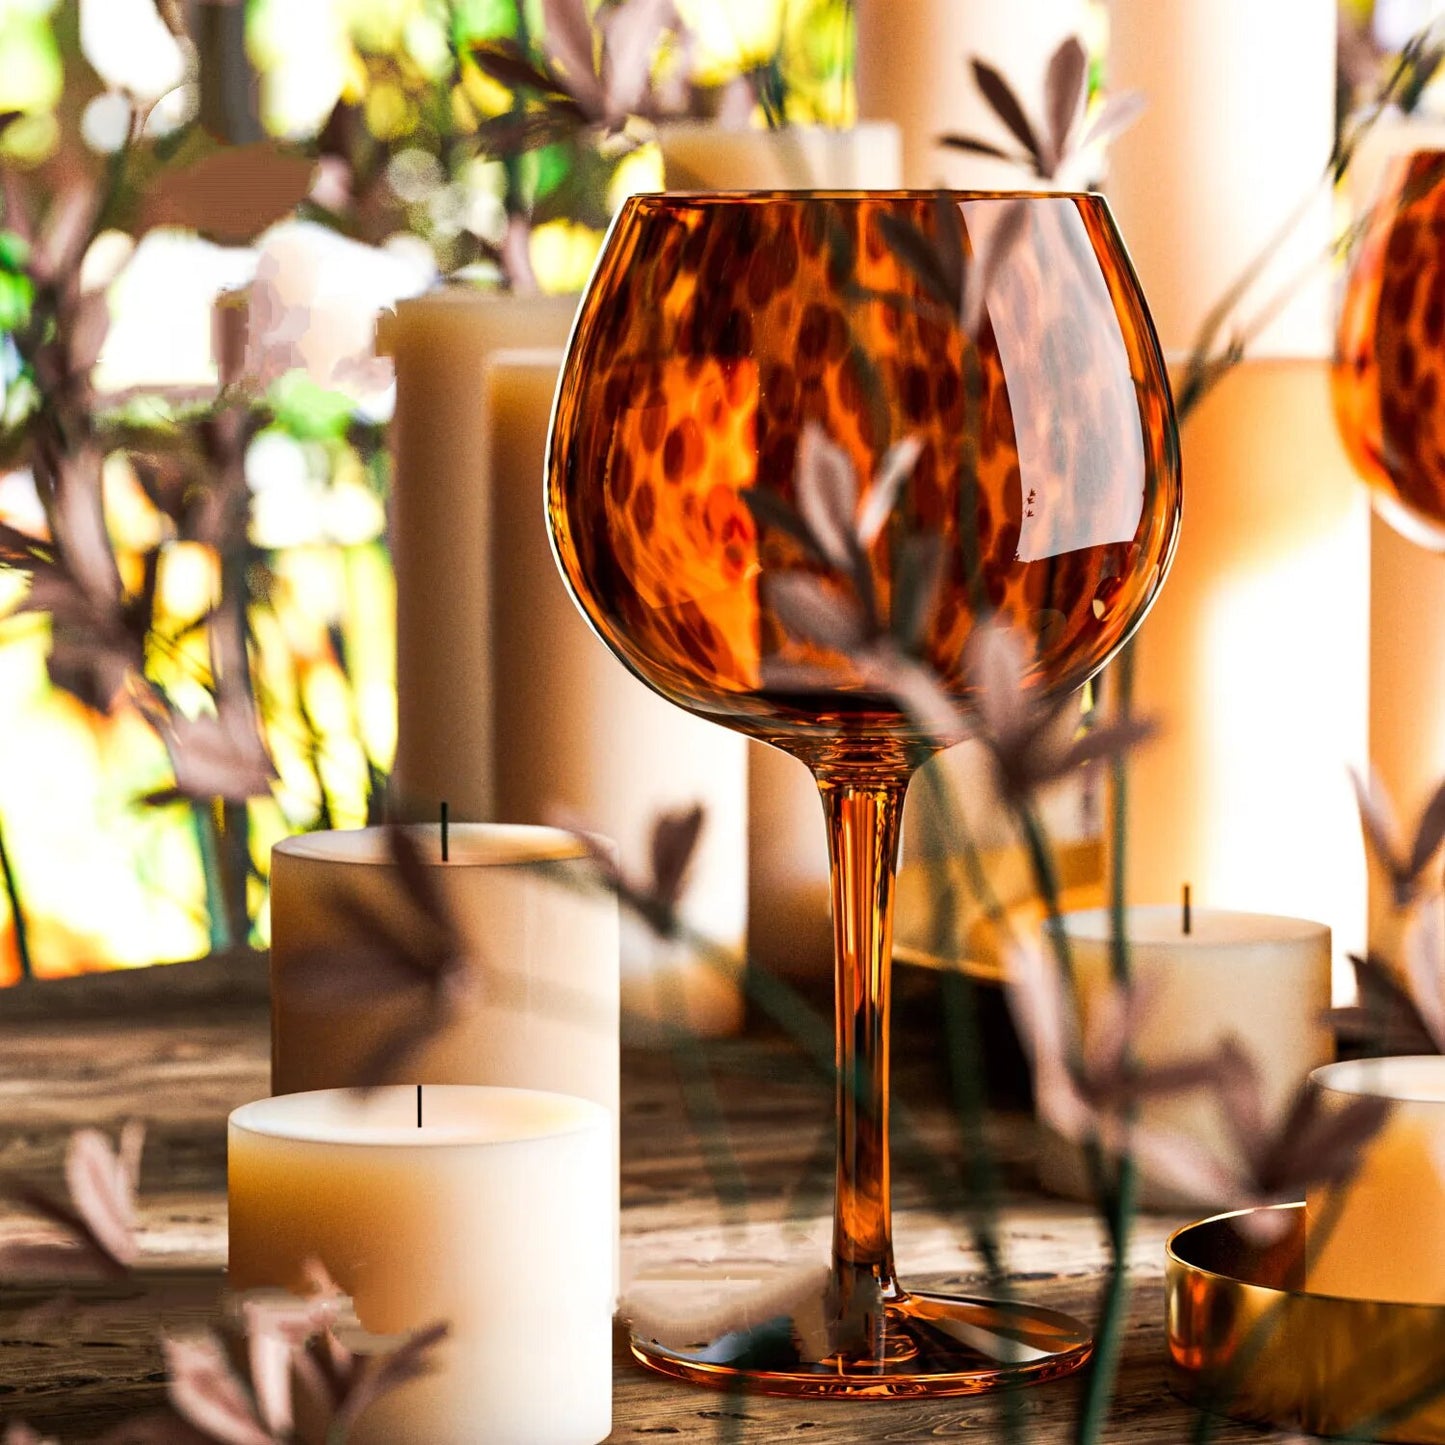 Artistic wine glasses for cozy autumn evenings